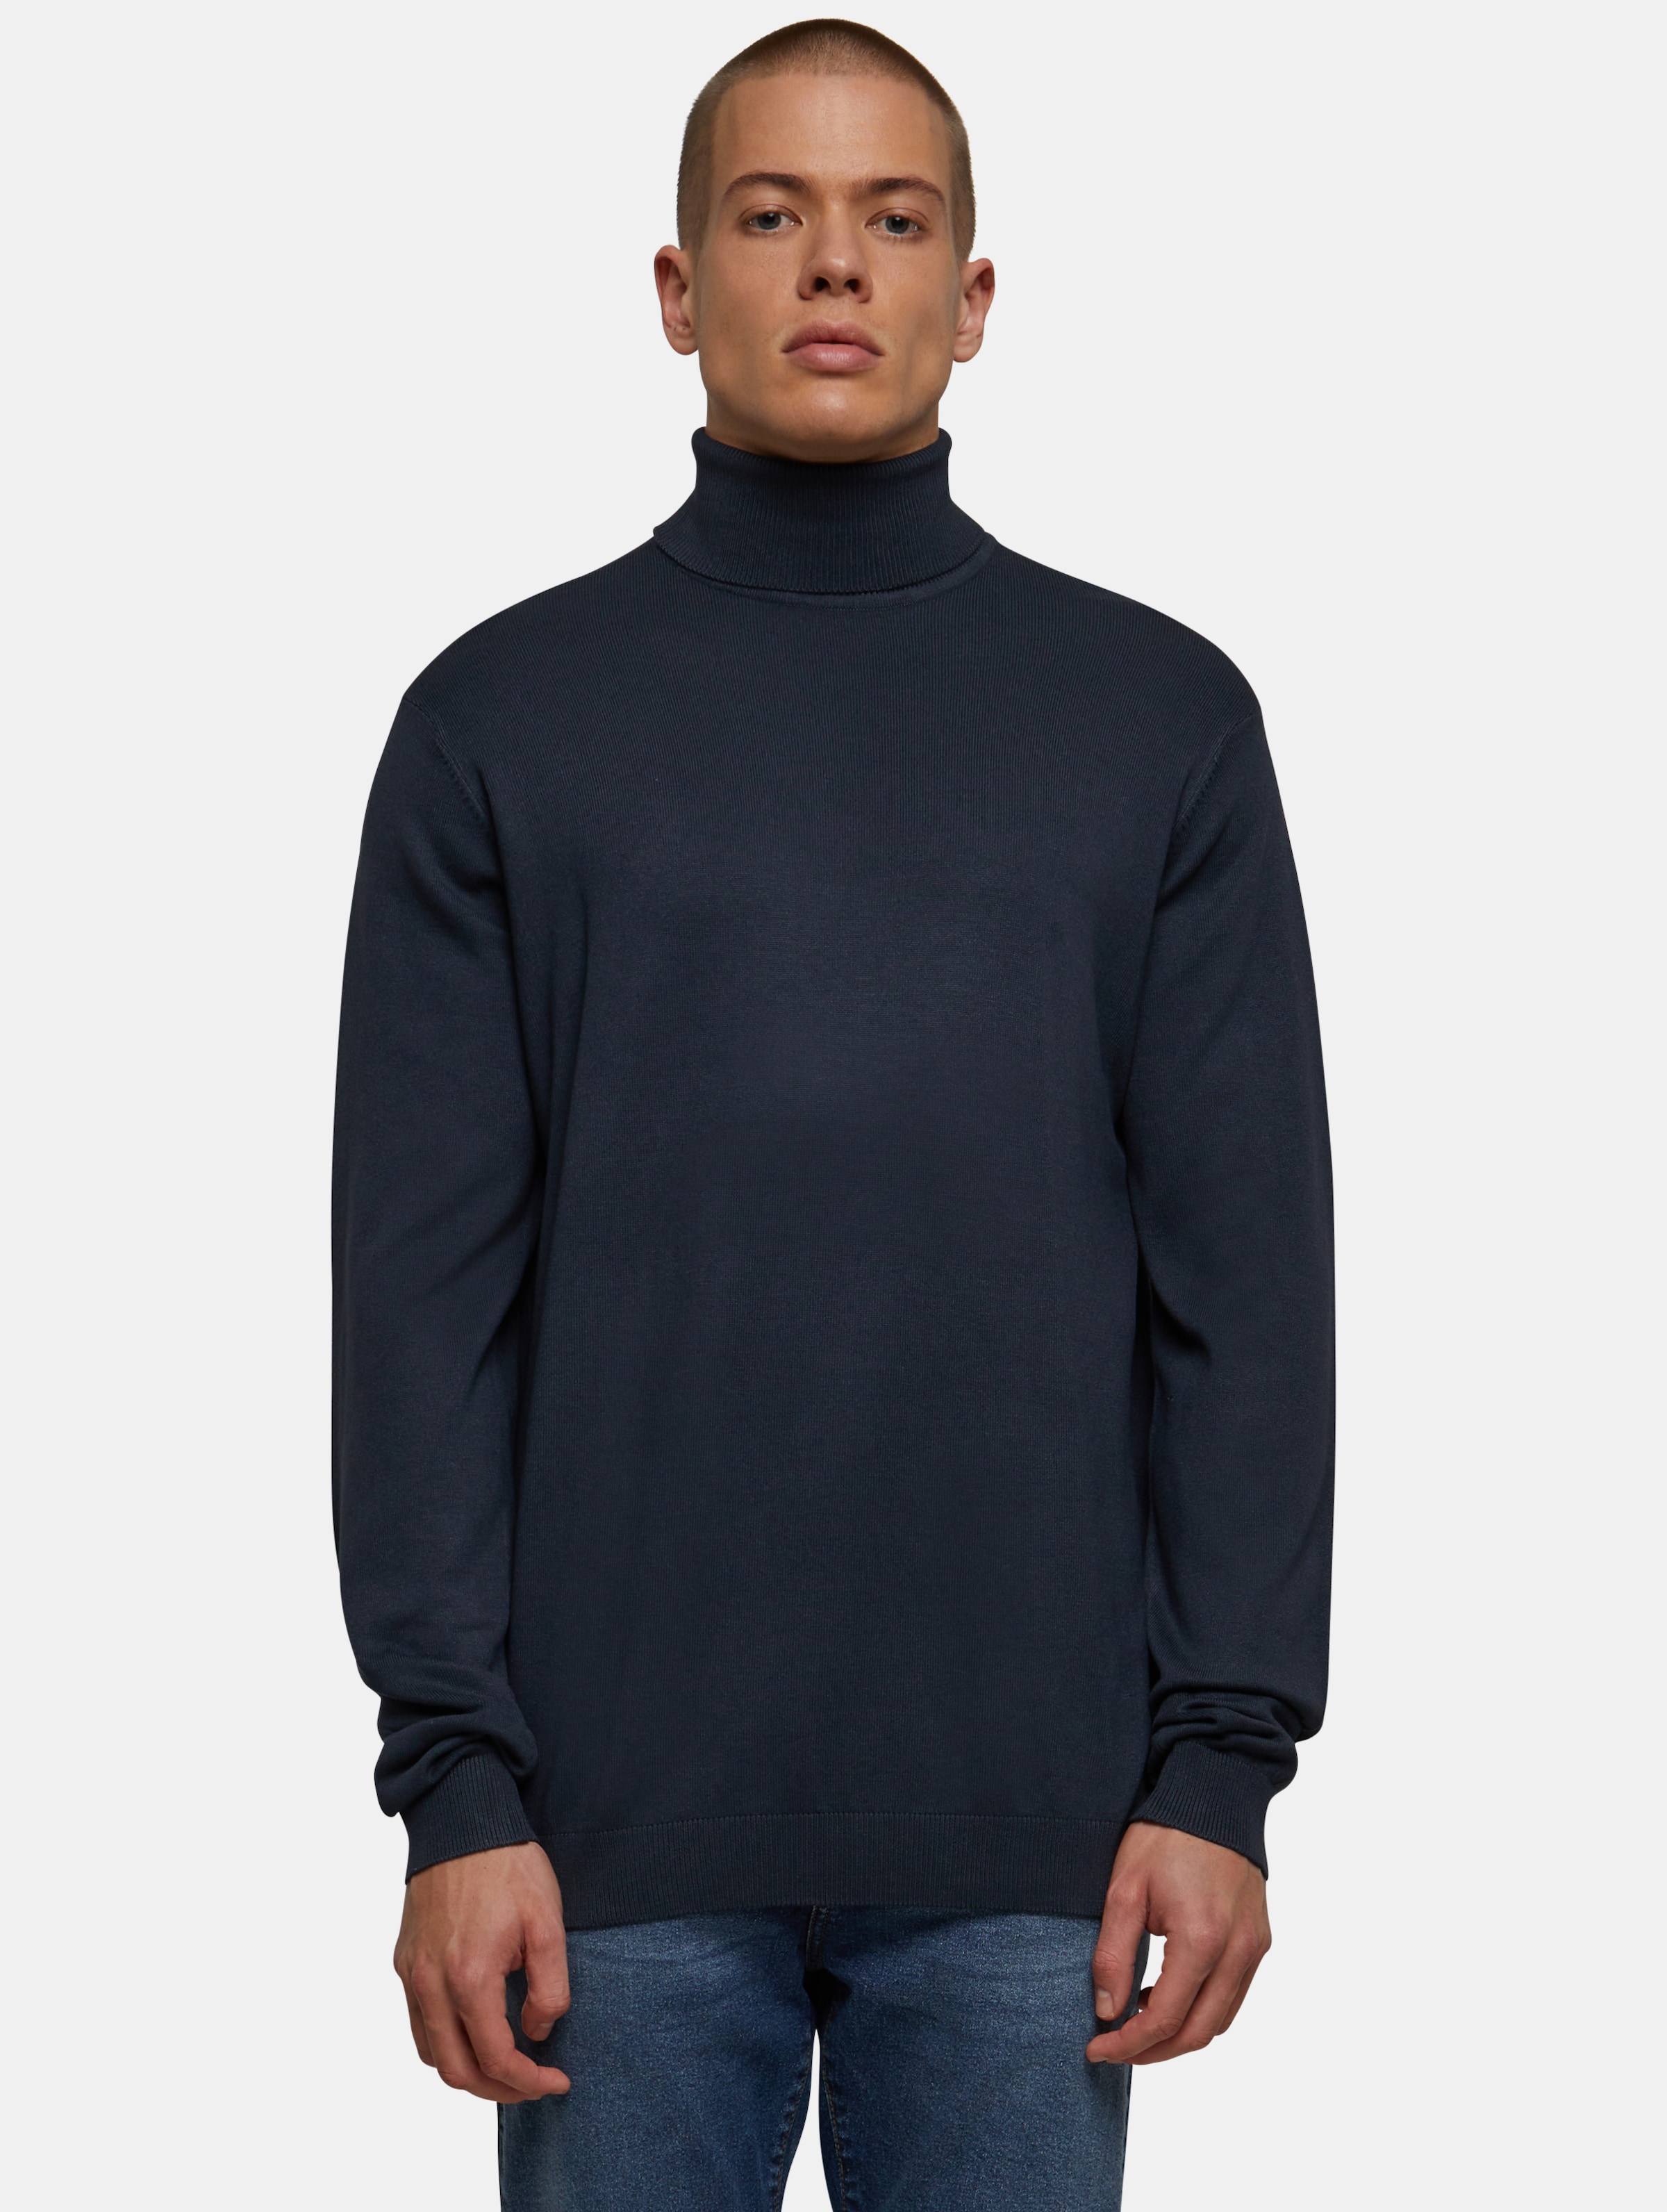 Urban Classics - Knitted Turtleneck Sweater - 5XL - Donkerblauw